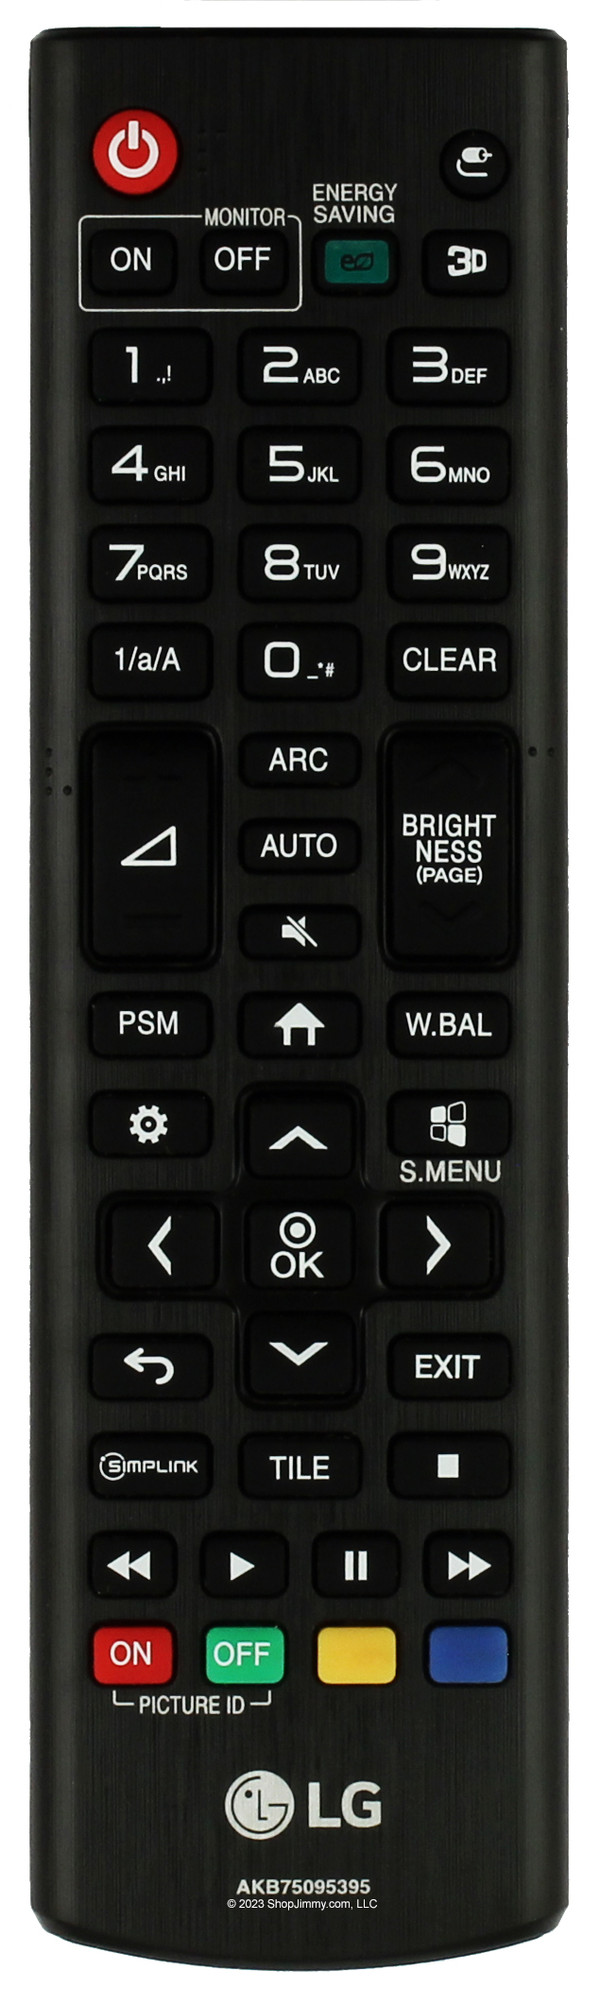 LG AKB75095395 Remote Control-- NEW